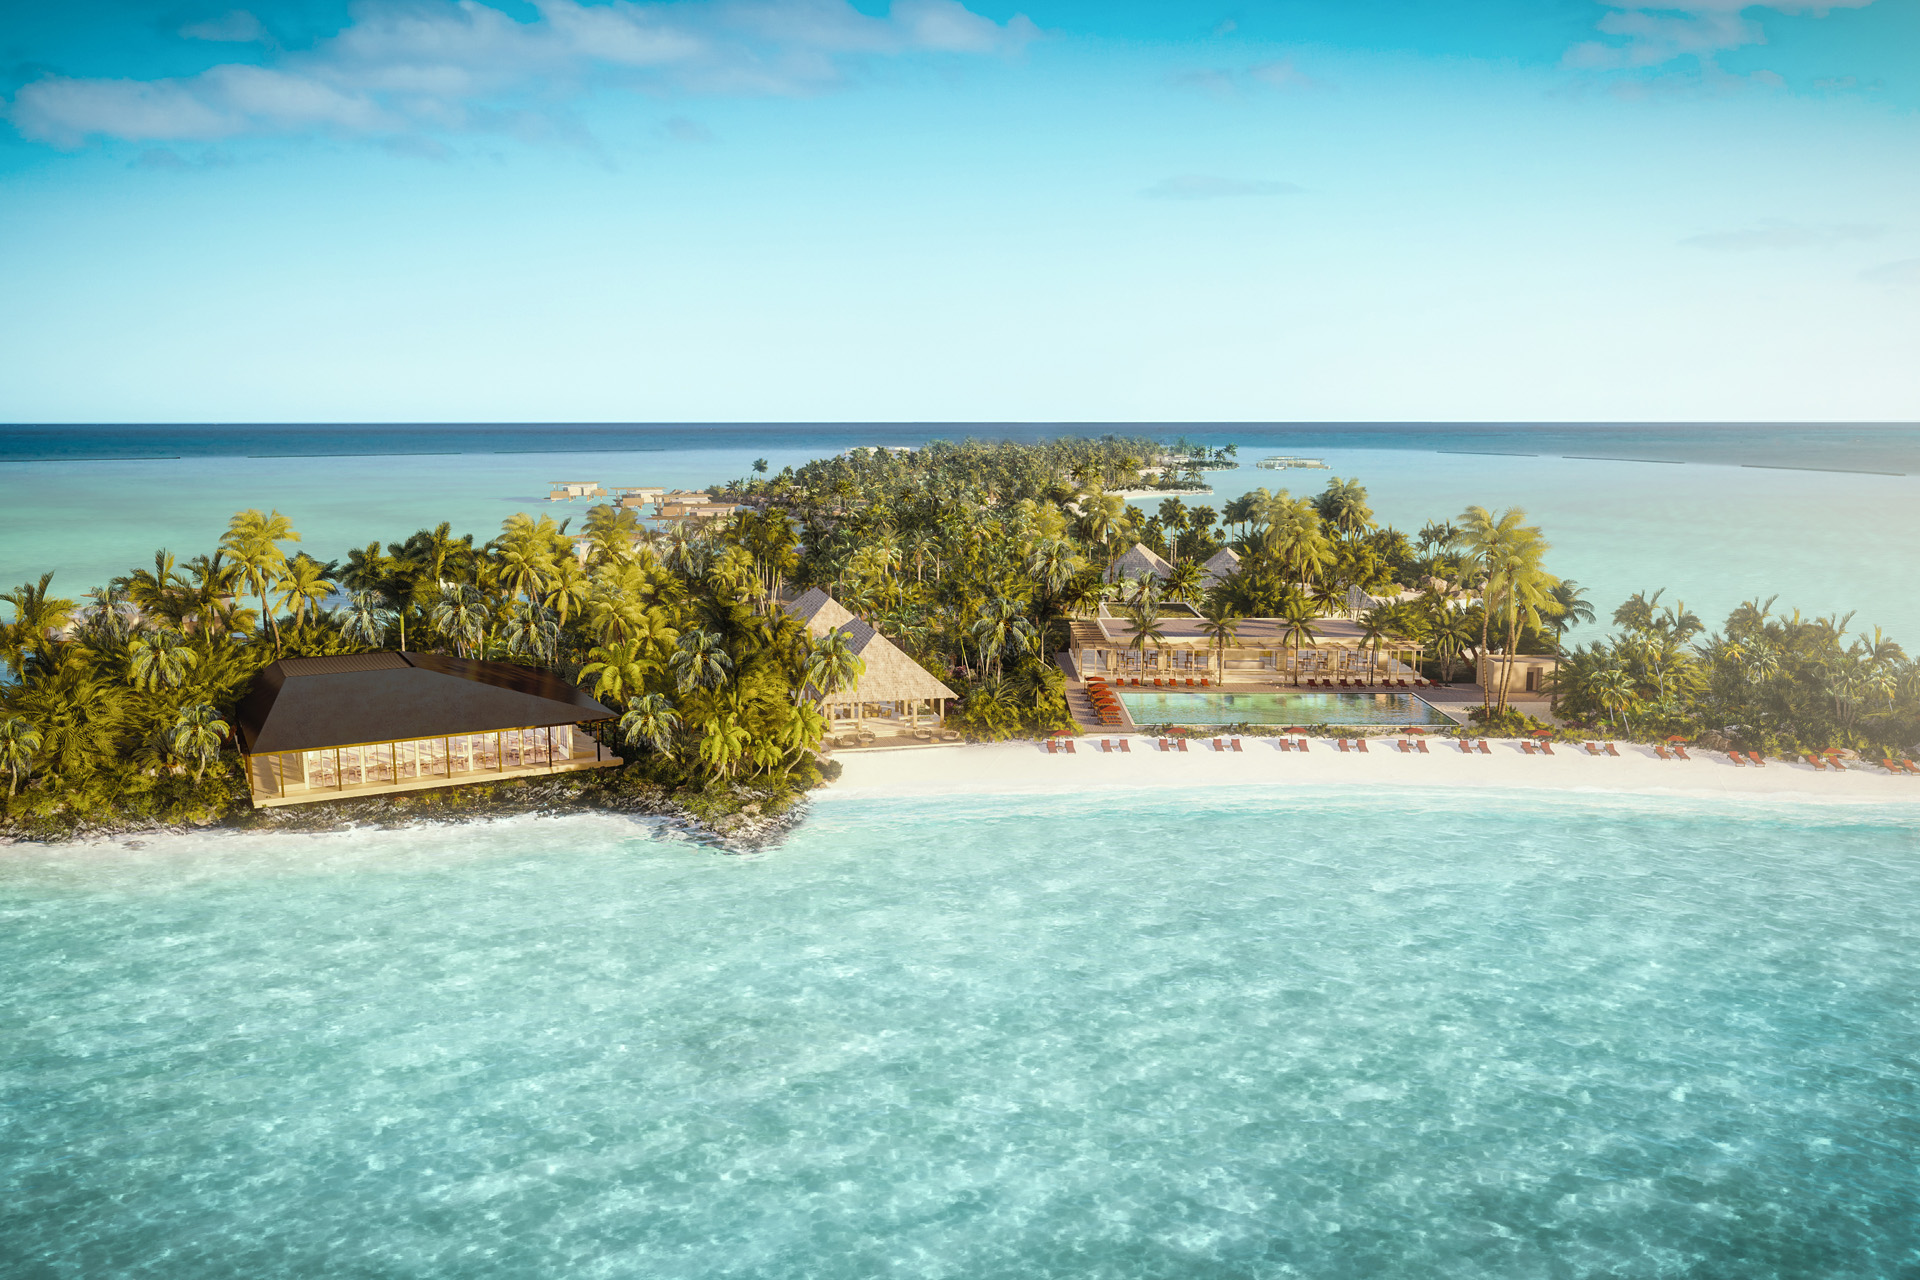 Maldives: New Bulgari Hotel Coming in 2025